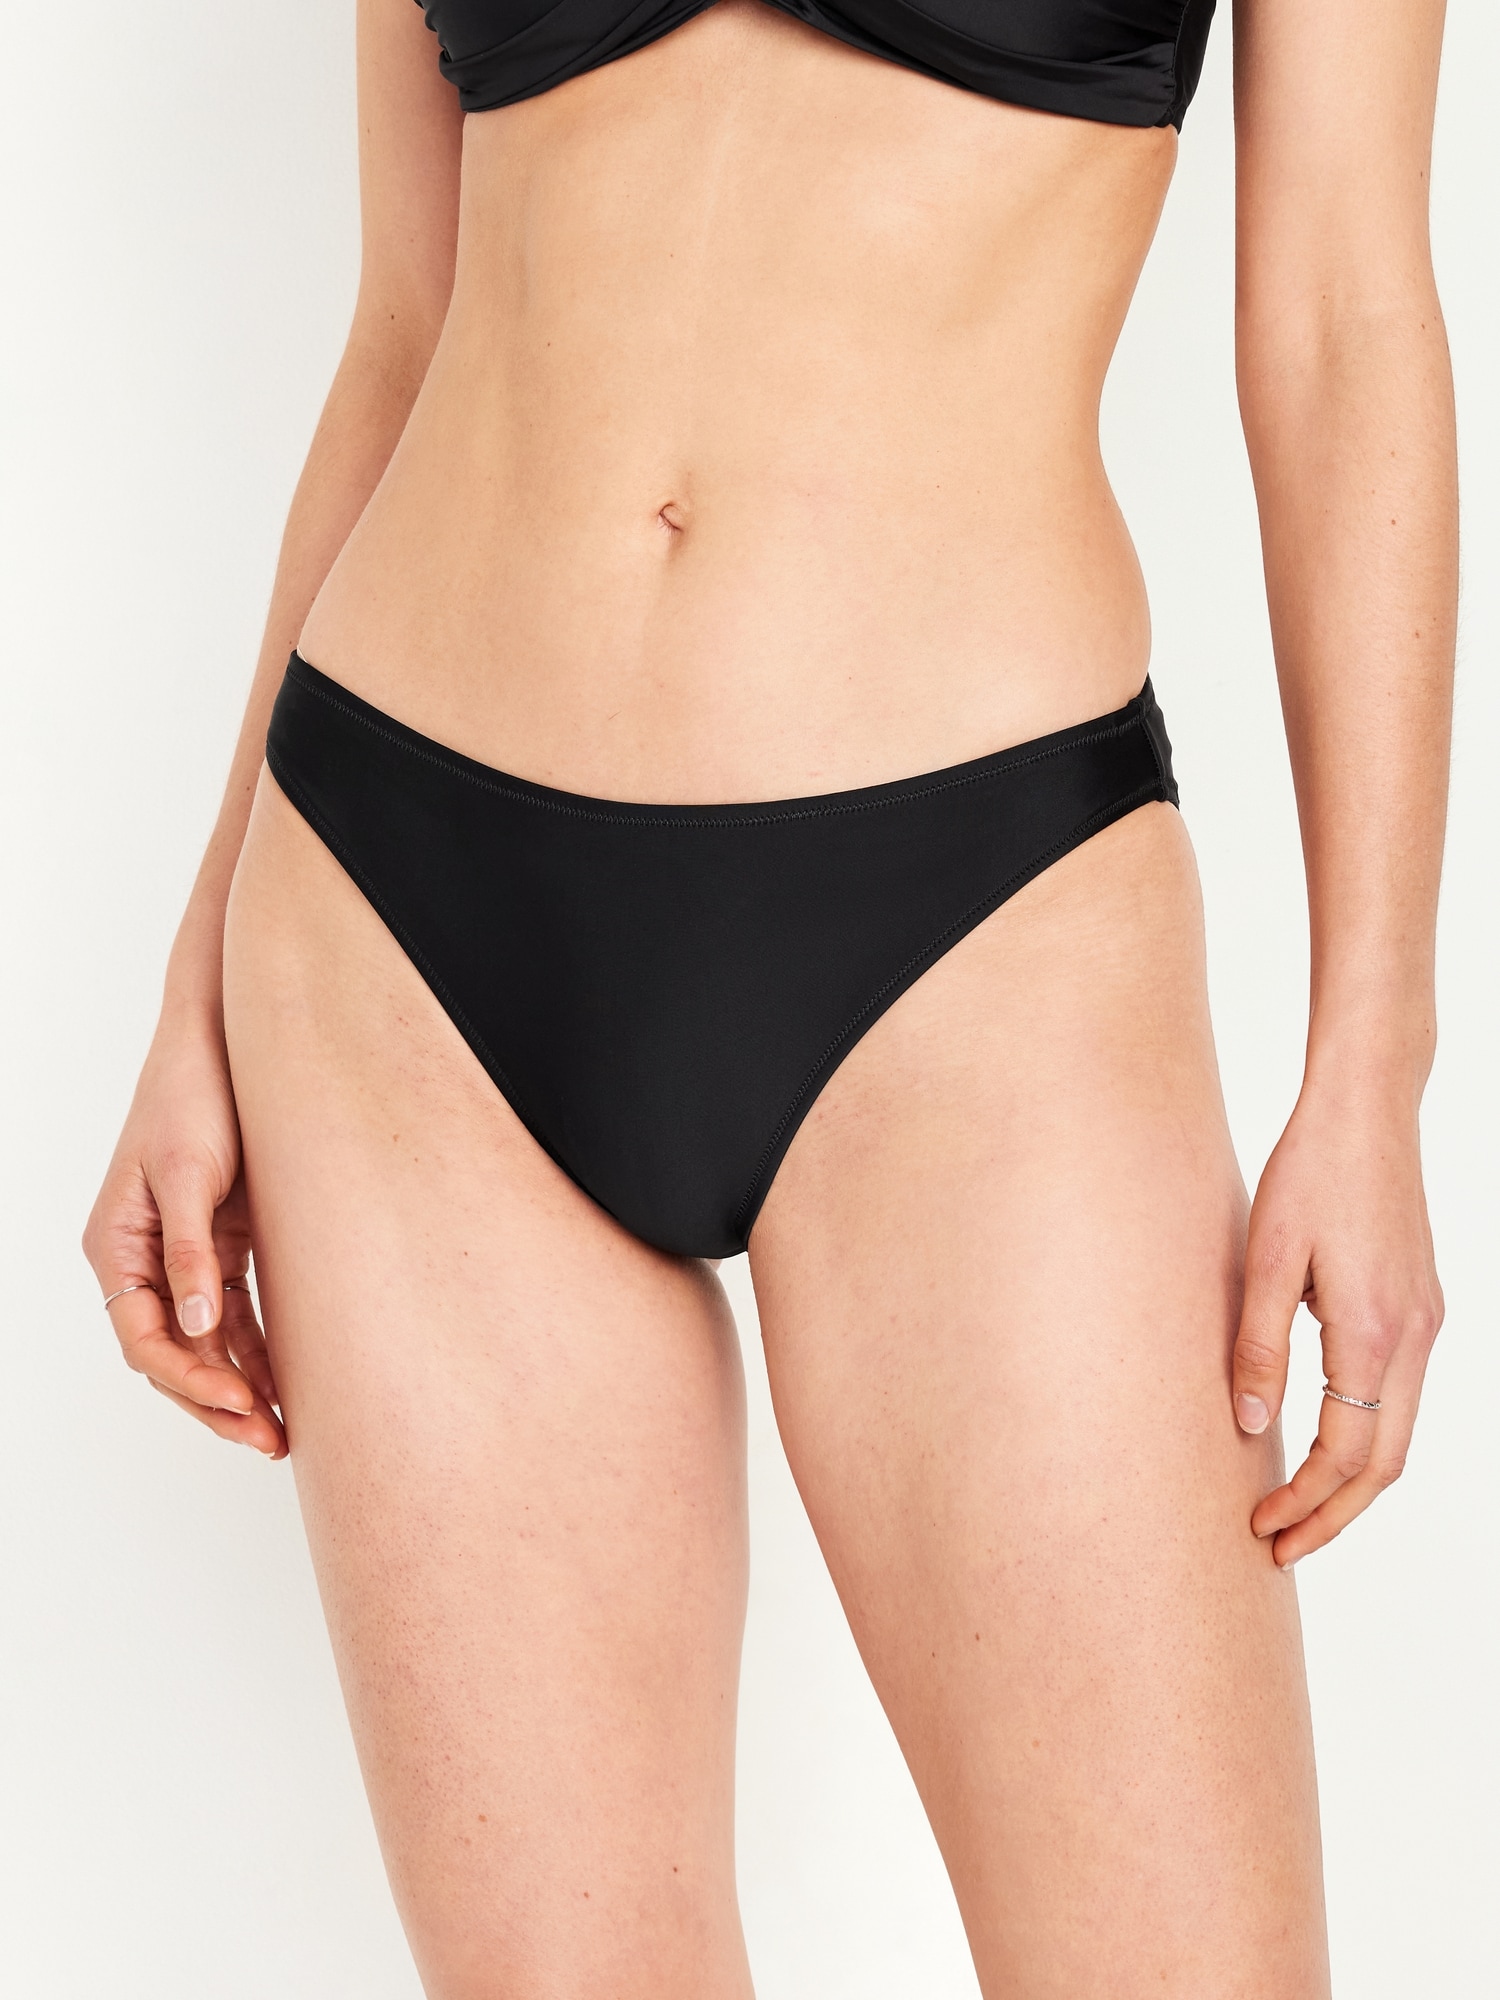 Vintage Style Target Women's Bikini Bottom Classic Briefs Casual